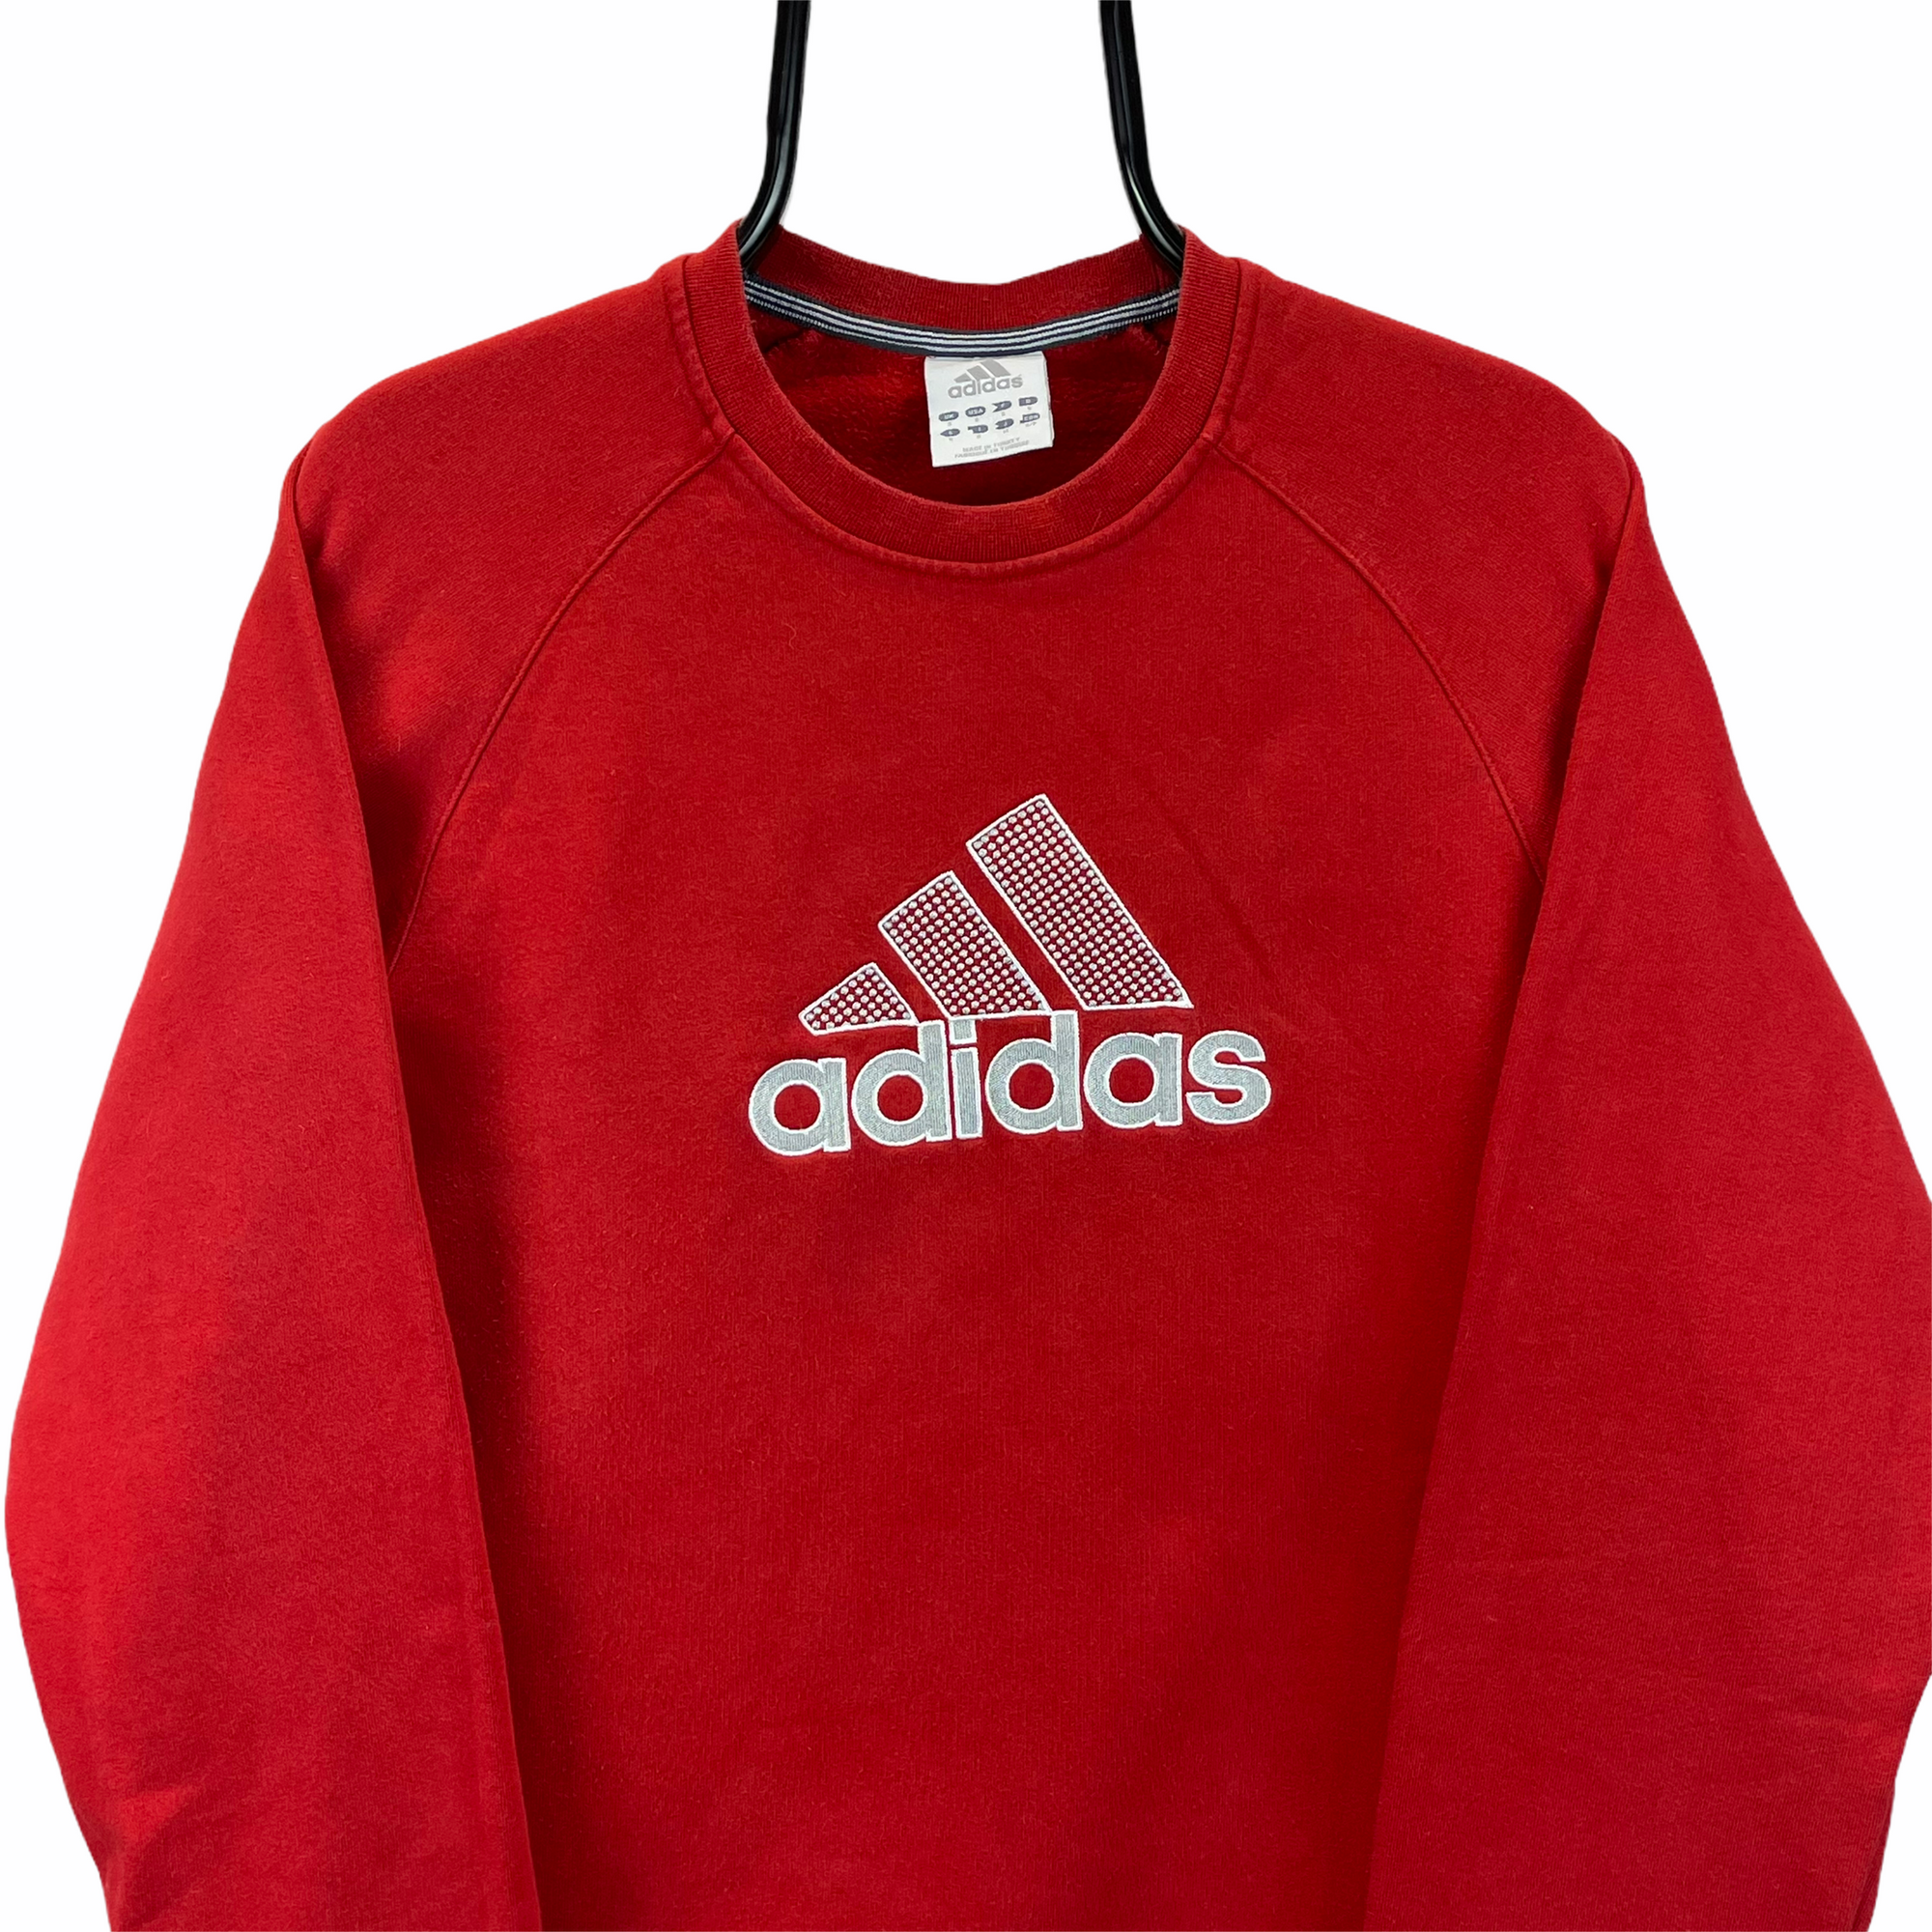 Vintage Adidas Spellout Sweatshirt in Red - Men's Small/Women's Medium